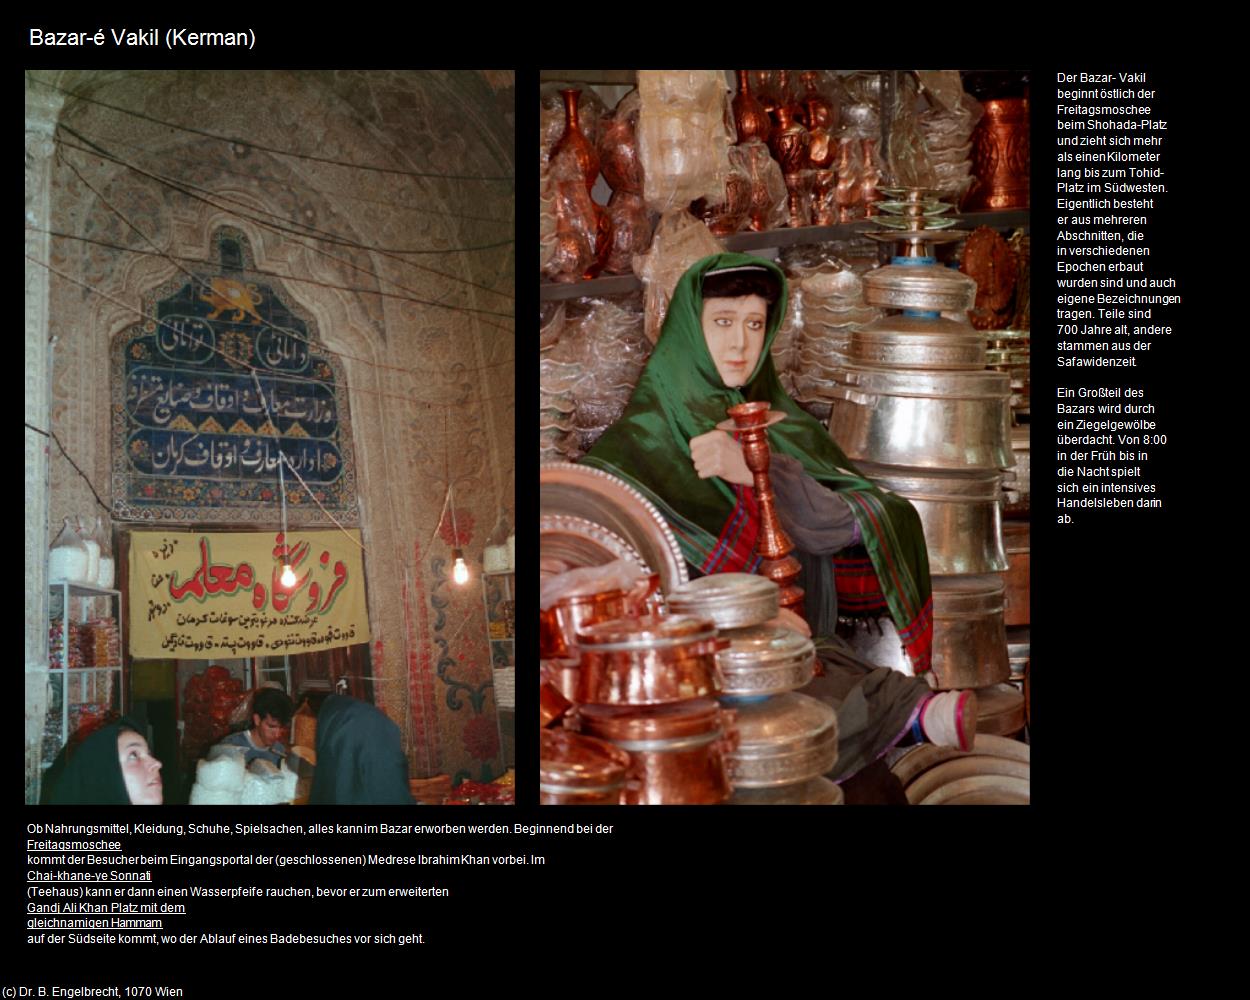 Bazar-e Vakil (Kerman) in Iran(c)B.Engelbrecht